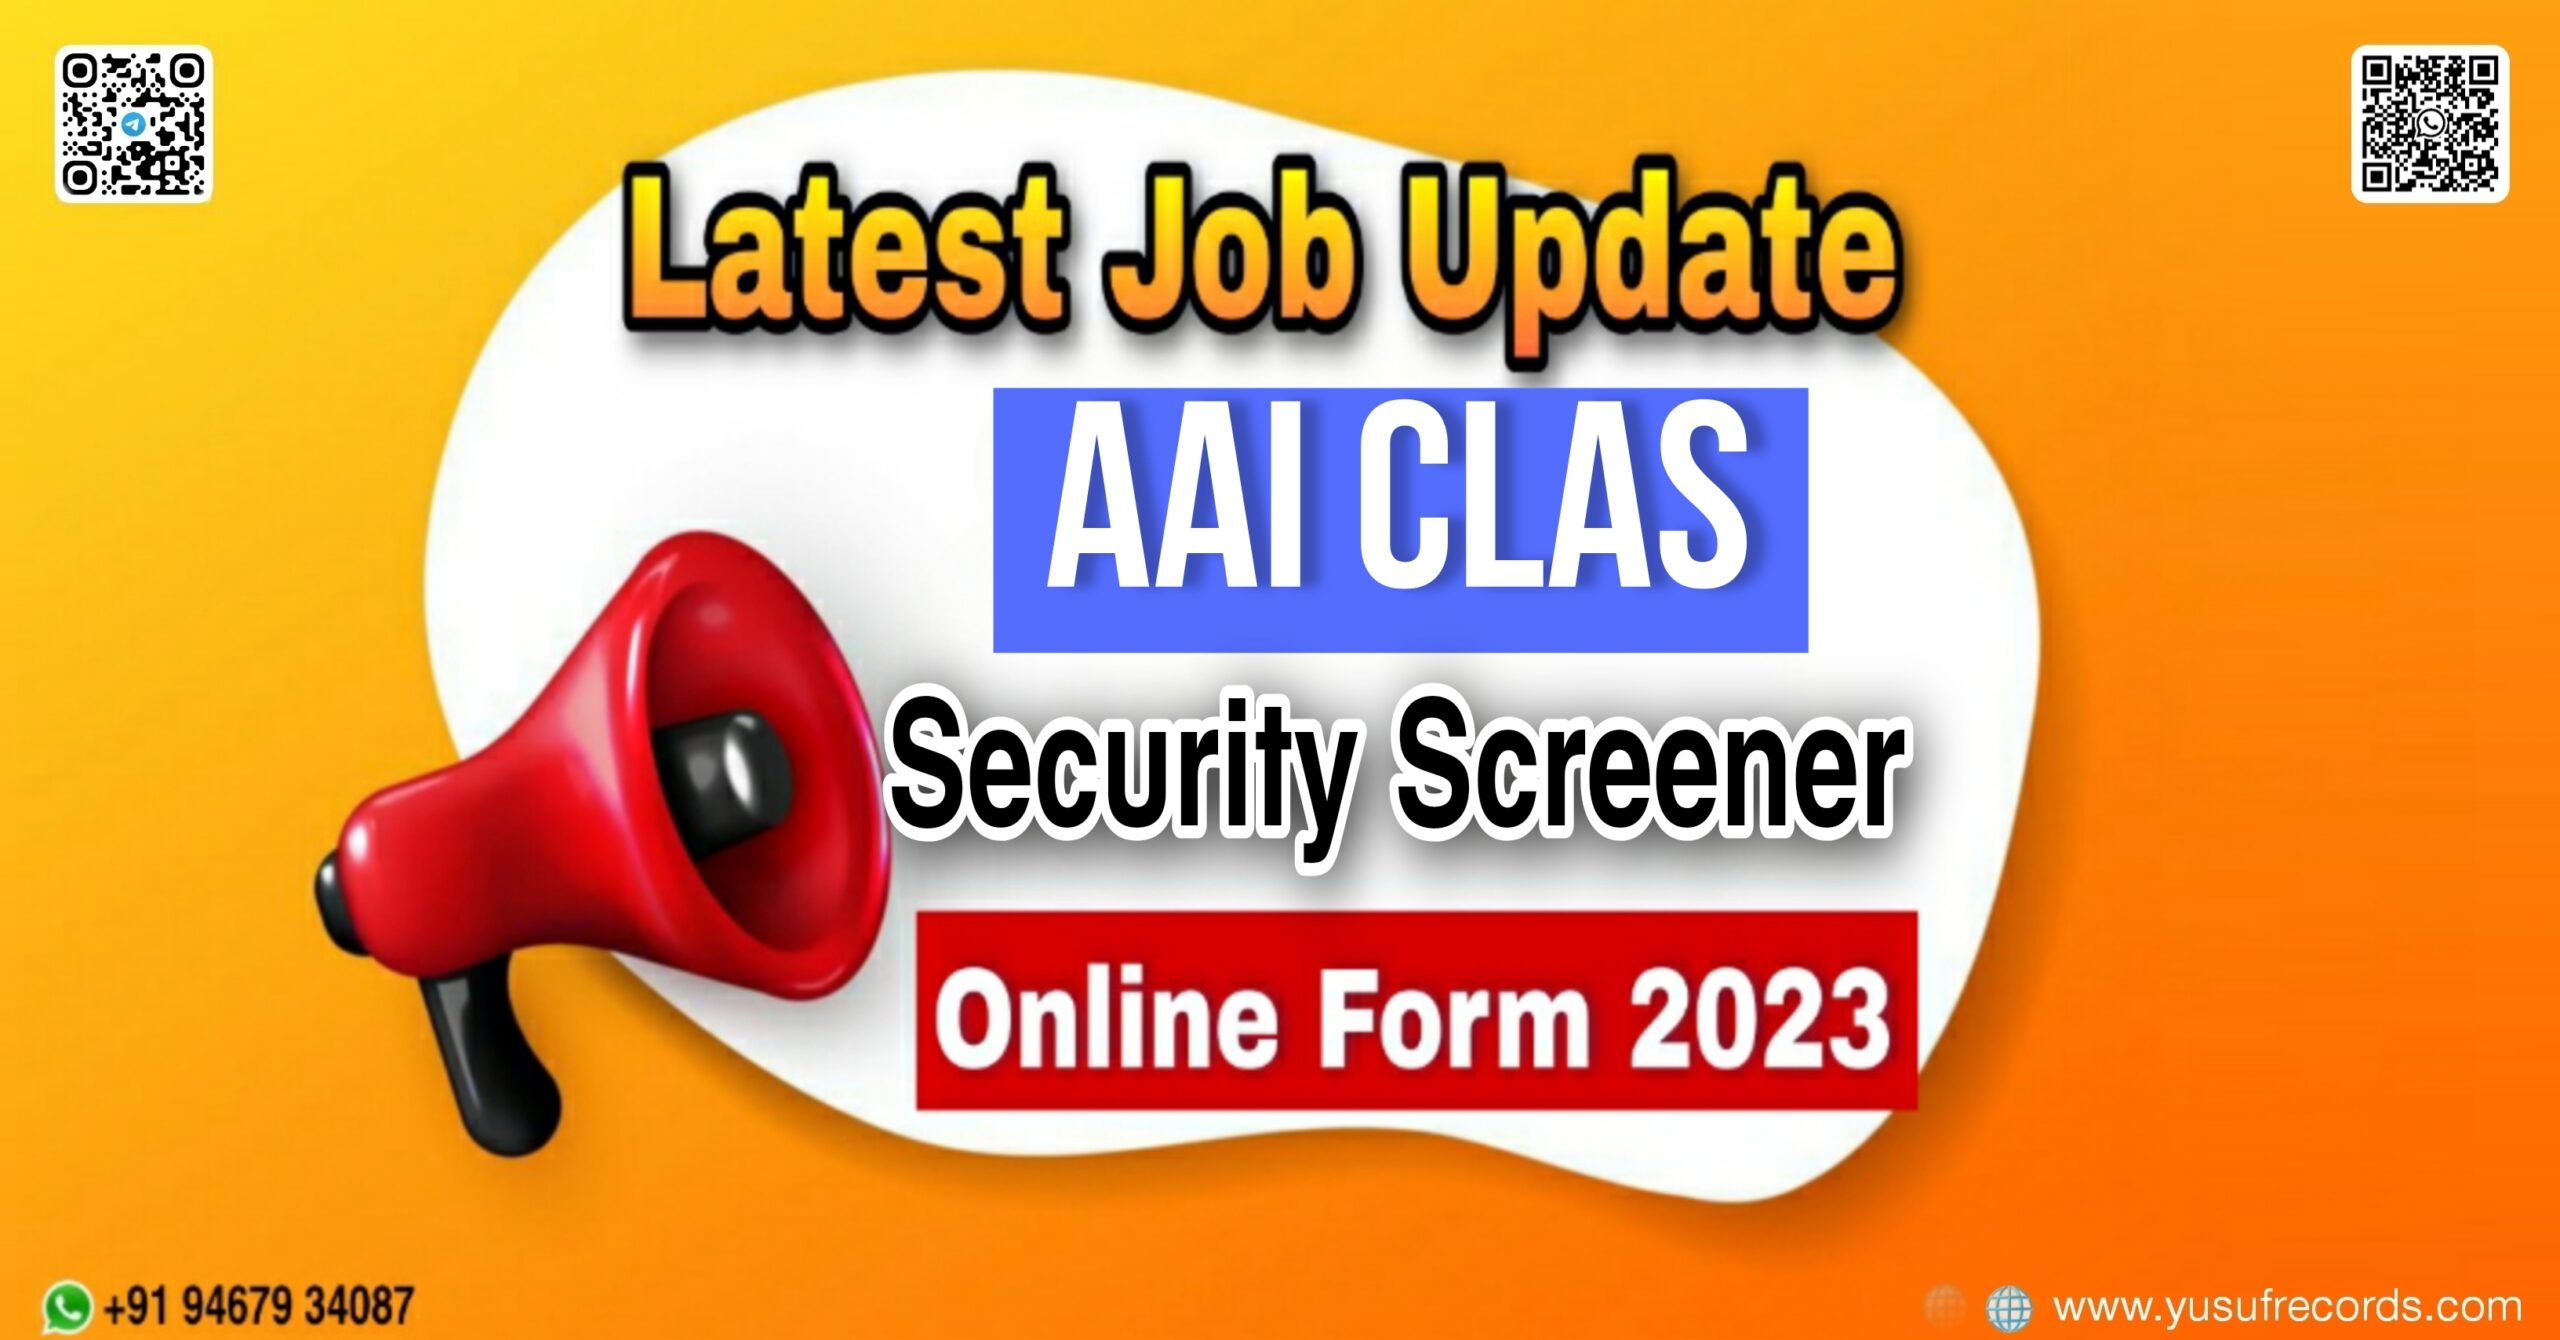 AAI CLAS Security Screener Online Form